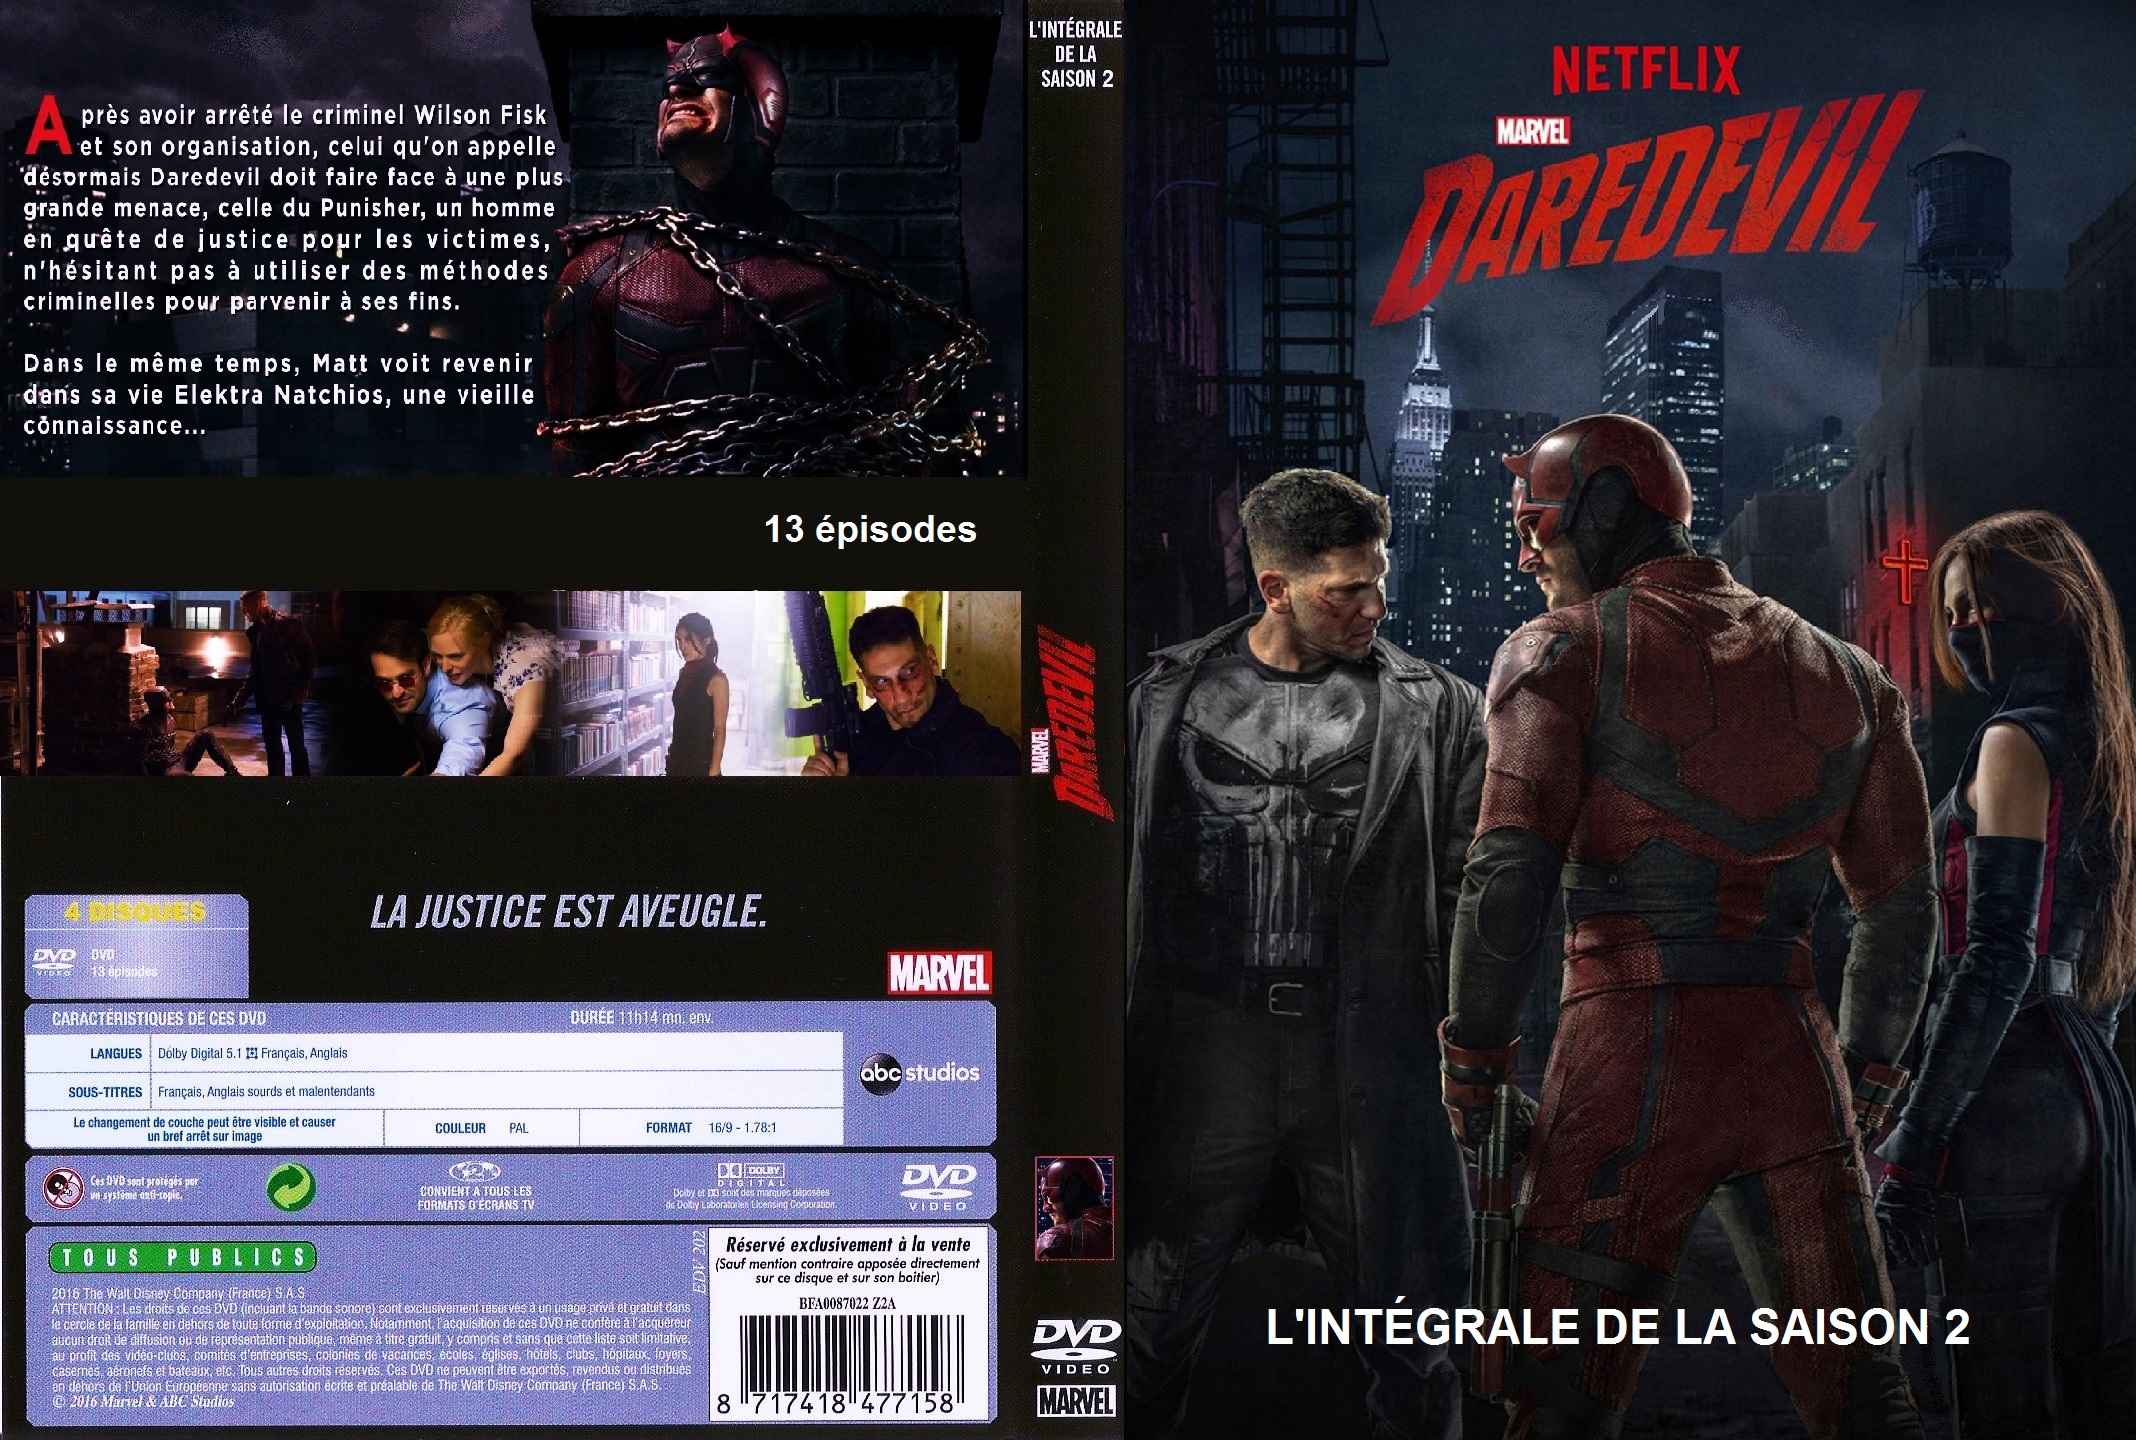 Jaquette DVD Daredevil saison 2 custom